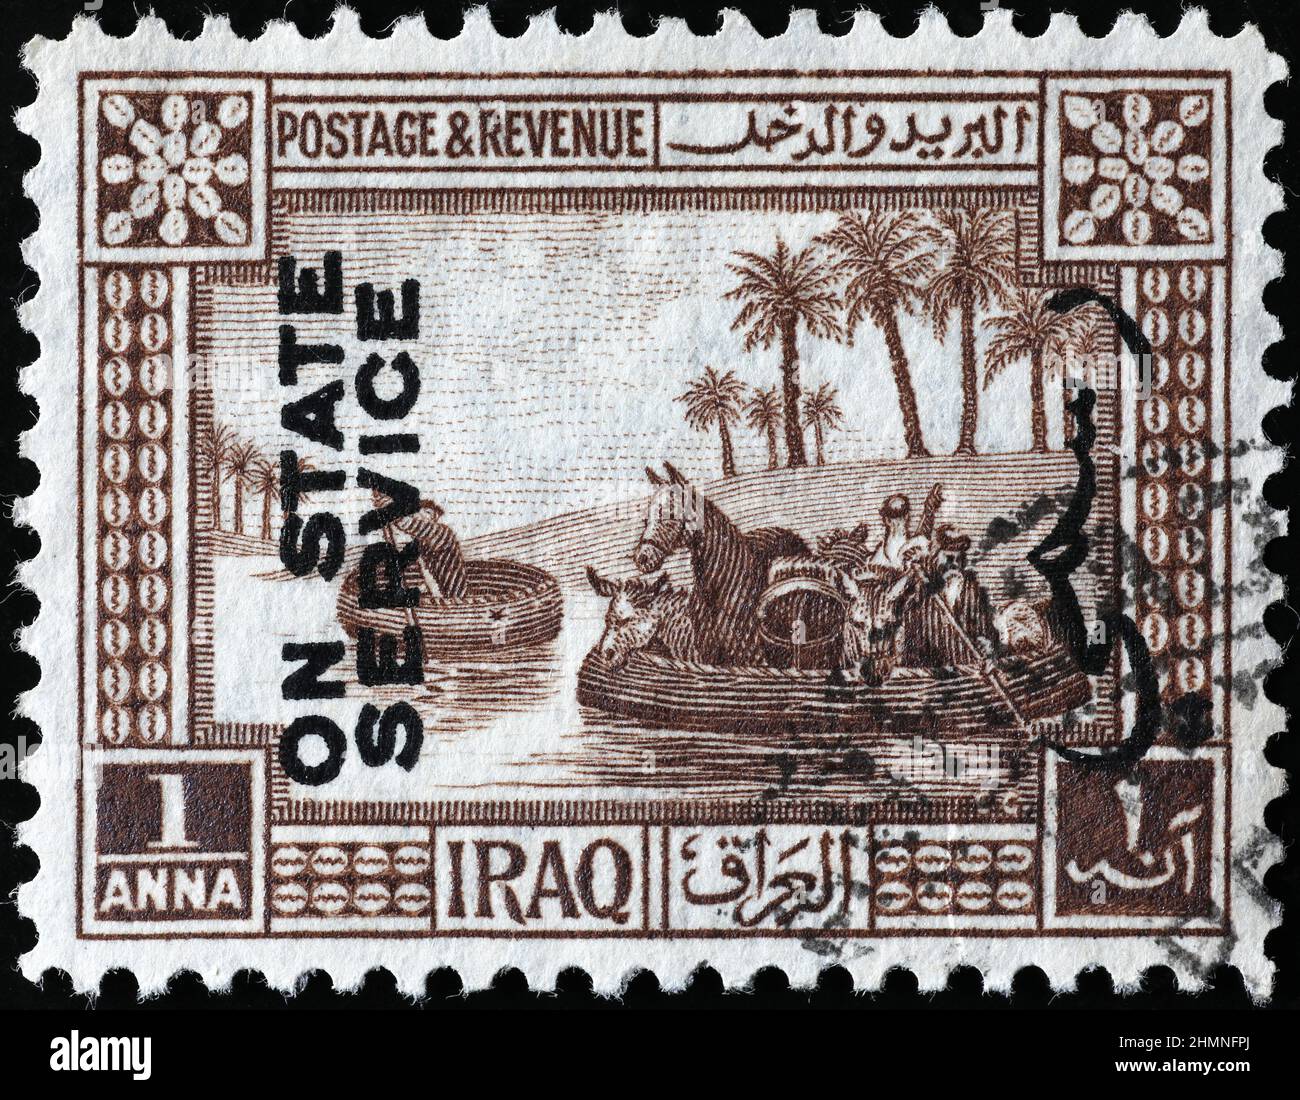 Traditional iraqi rafts on vintage postage stamp Stock Photo